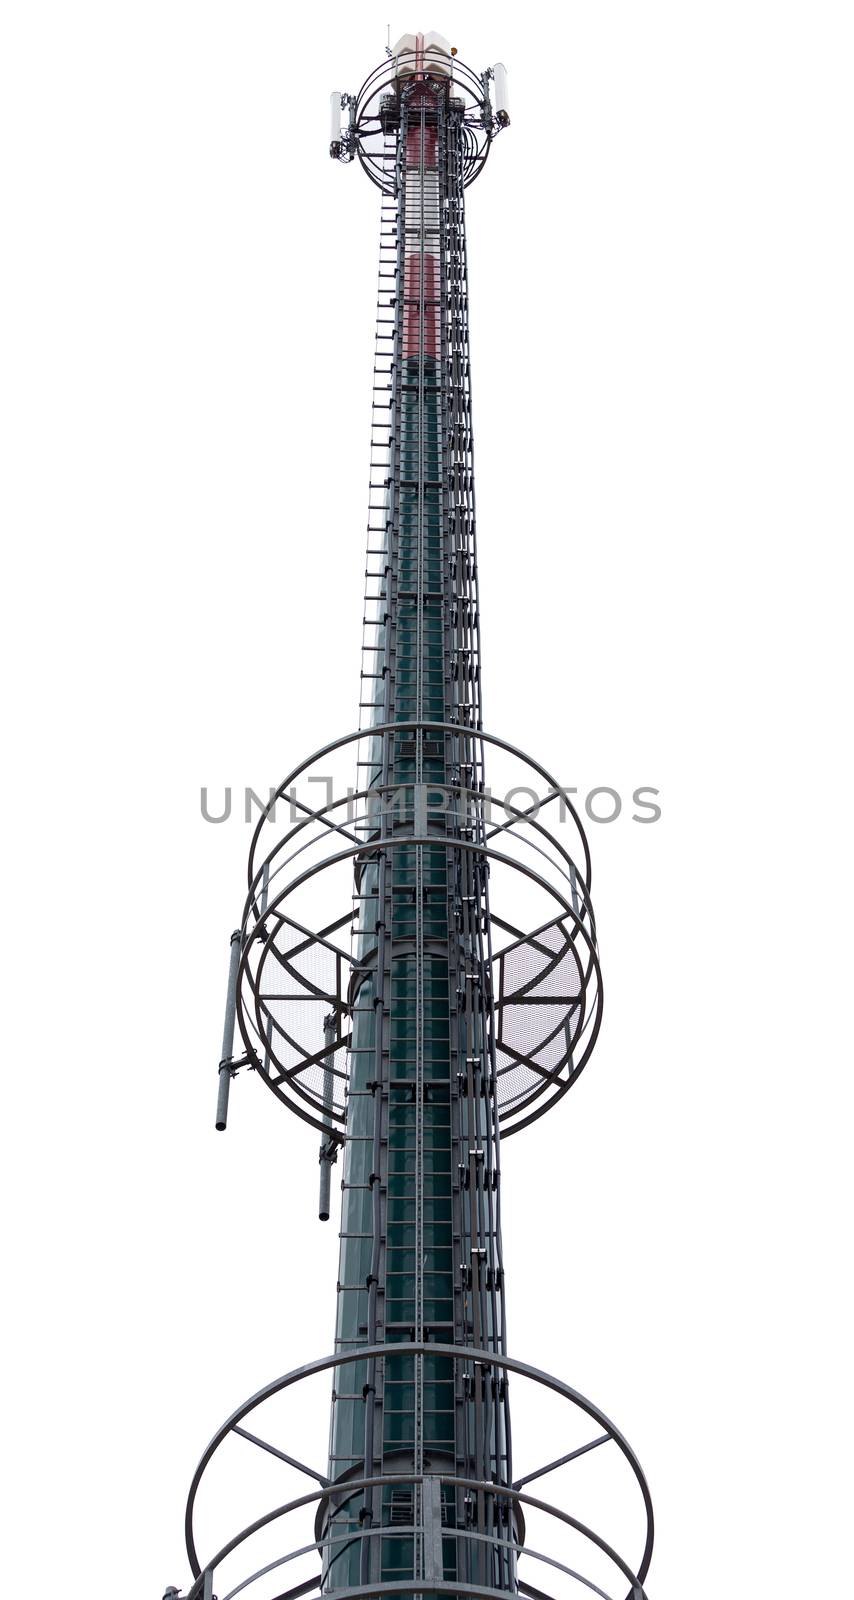 Cellular communication tower on white background